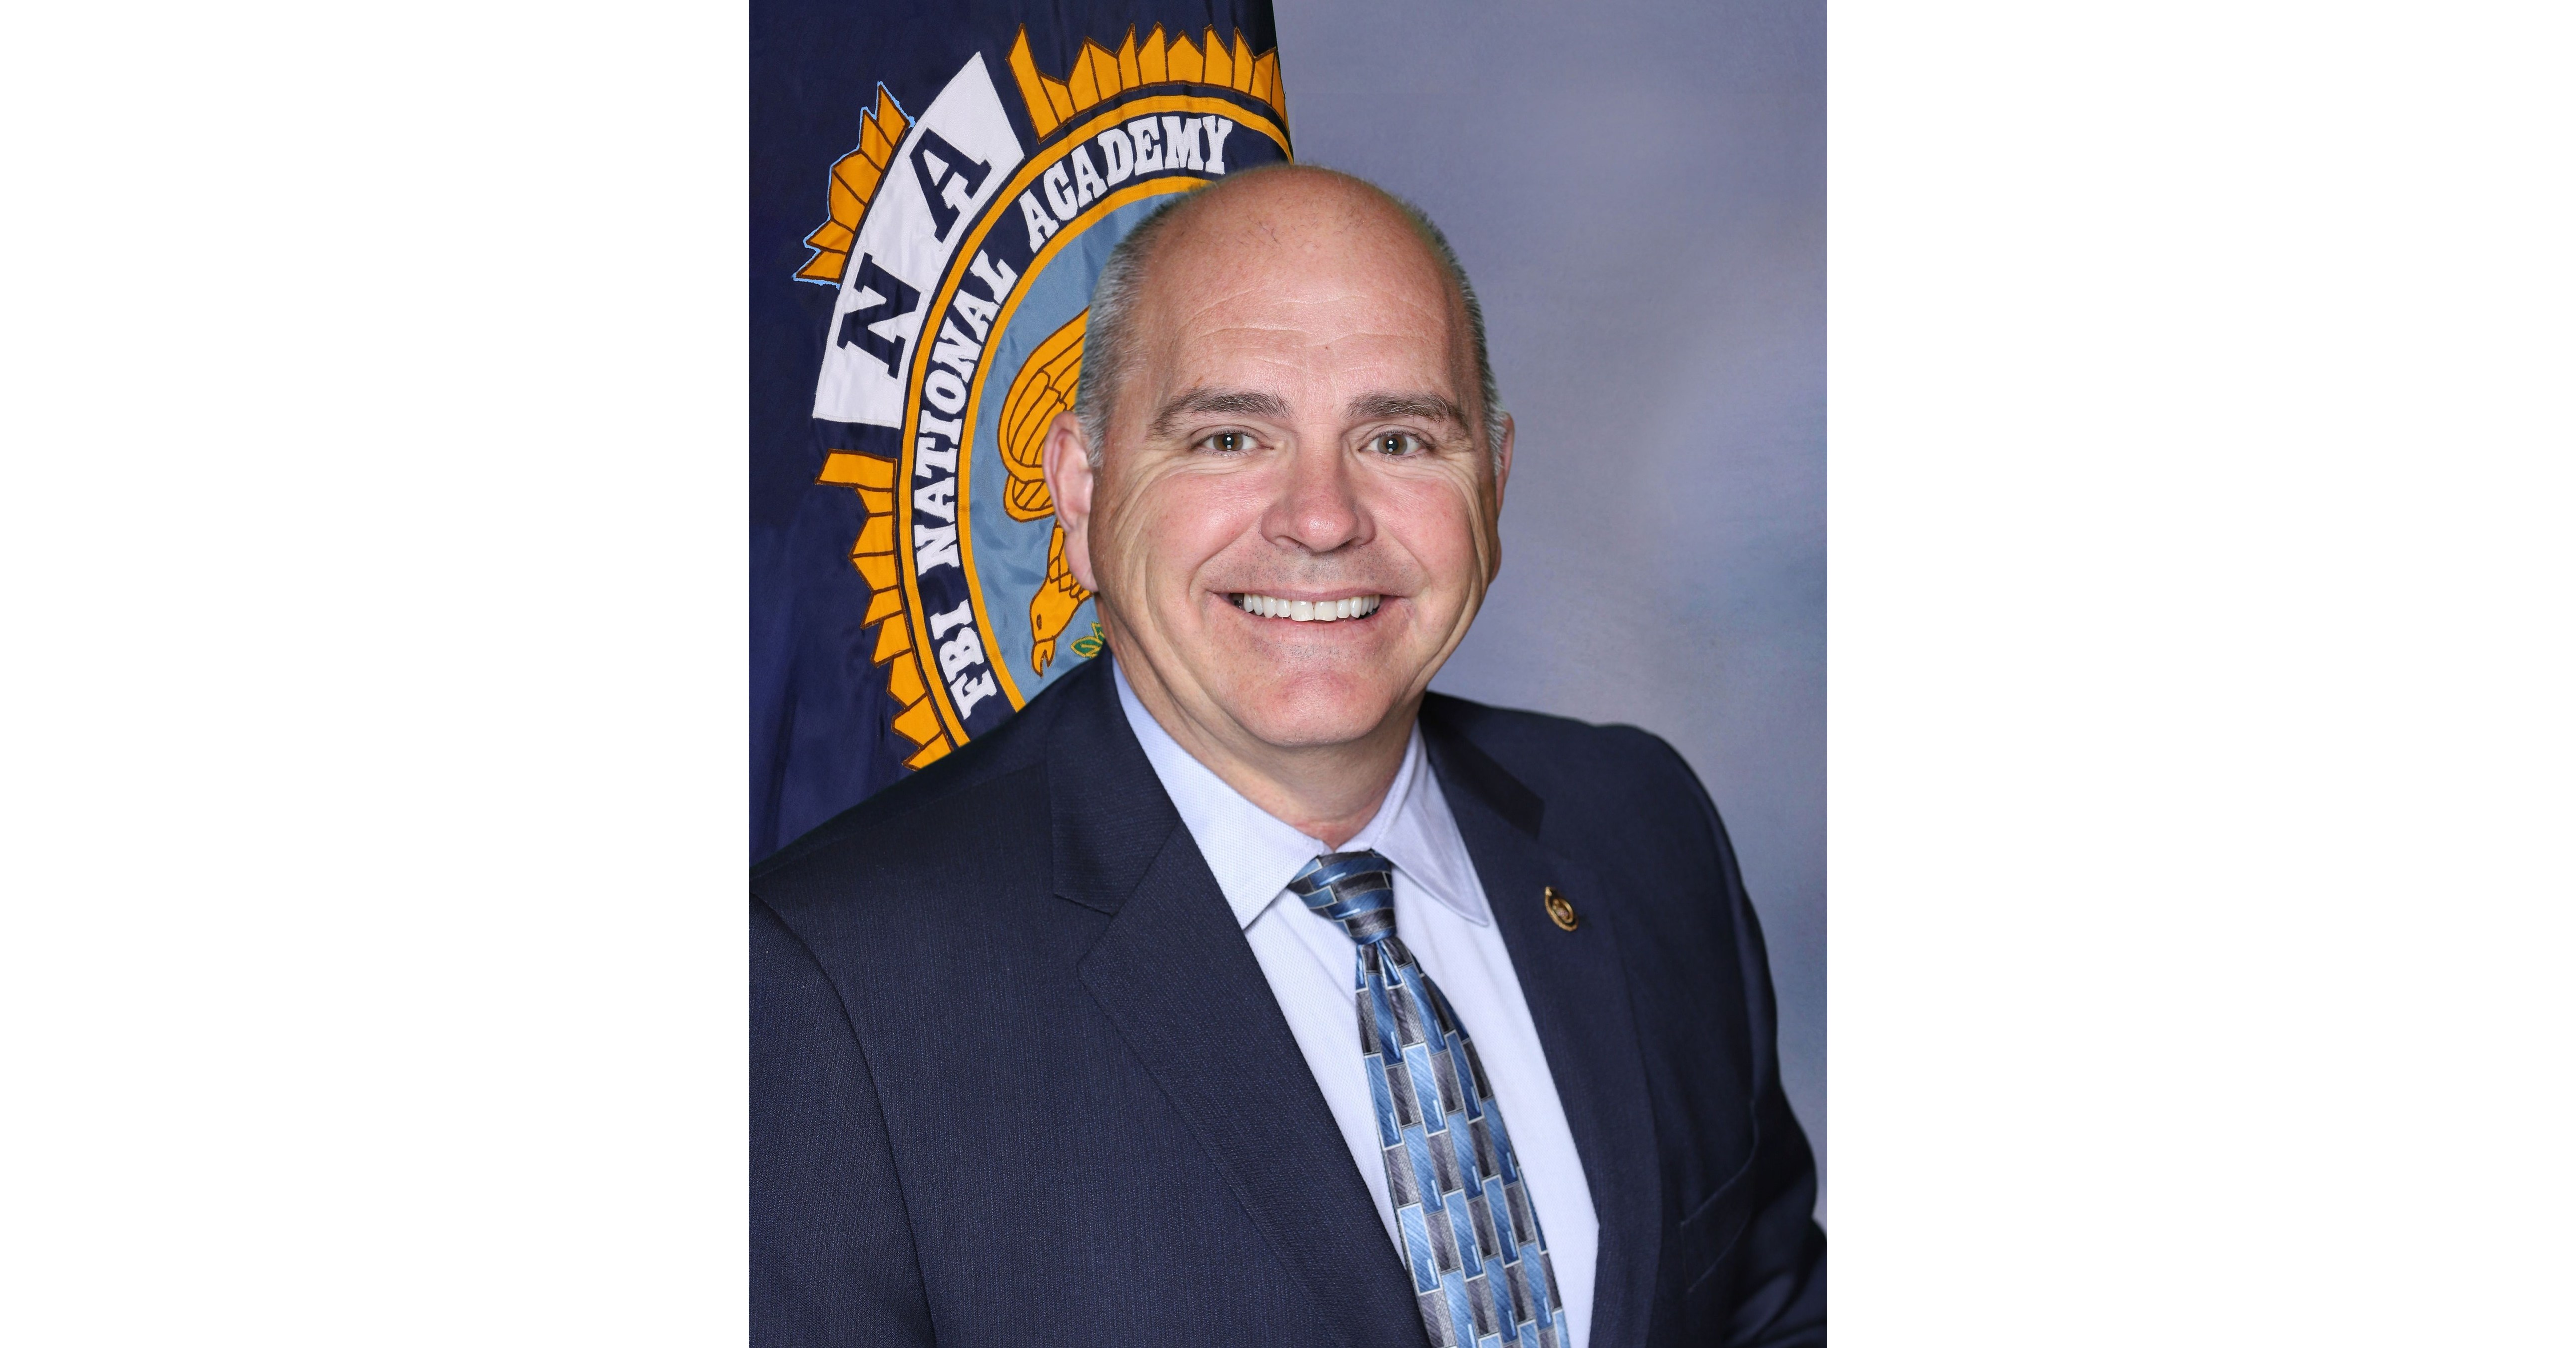   
																The FBI National Academy Associates, Inc. Announces New Association President Timothy Braniff 
															 